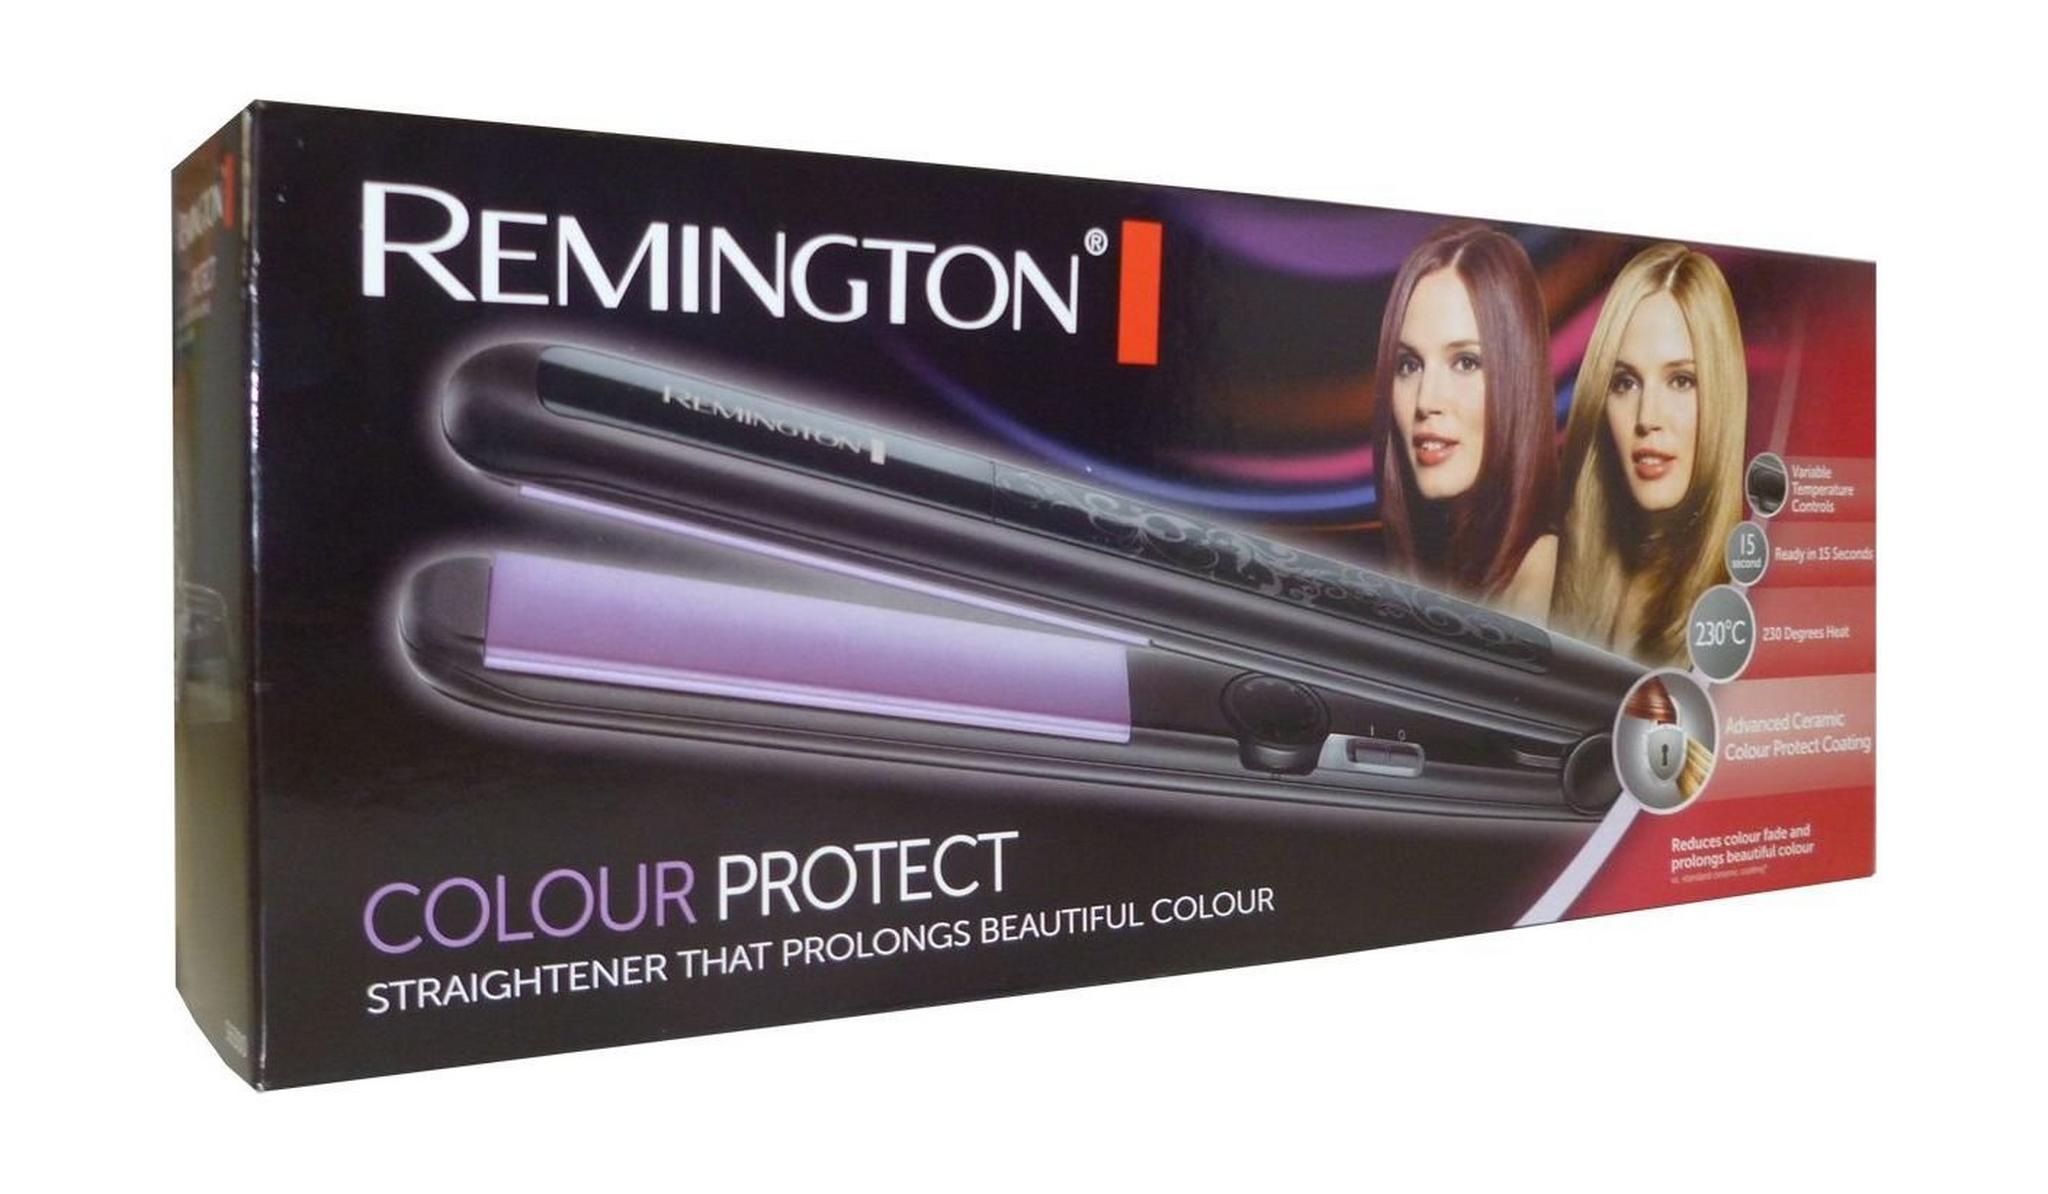 Remington Color Protect Hair Straightener (S6300) - Black